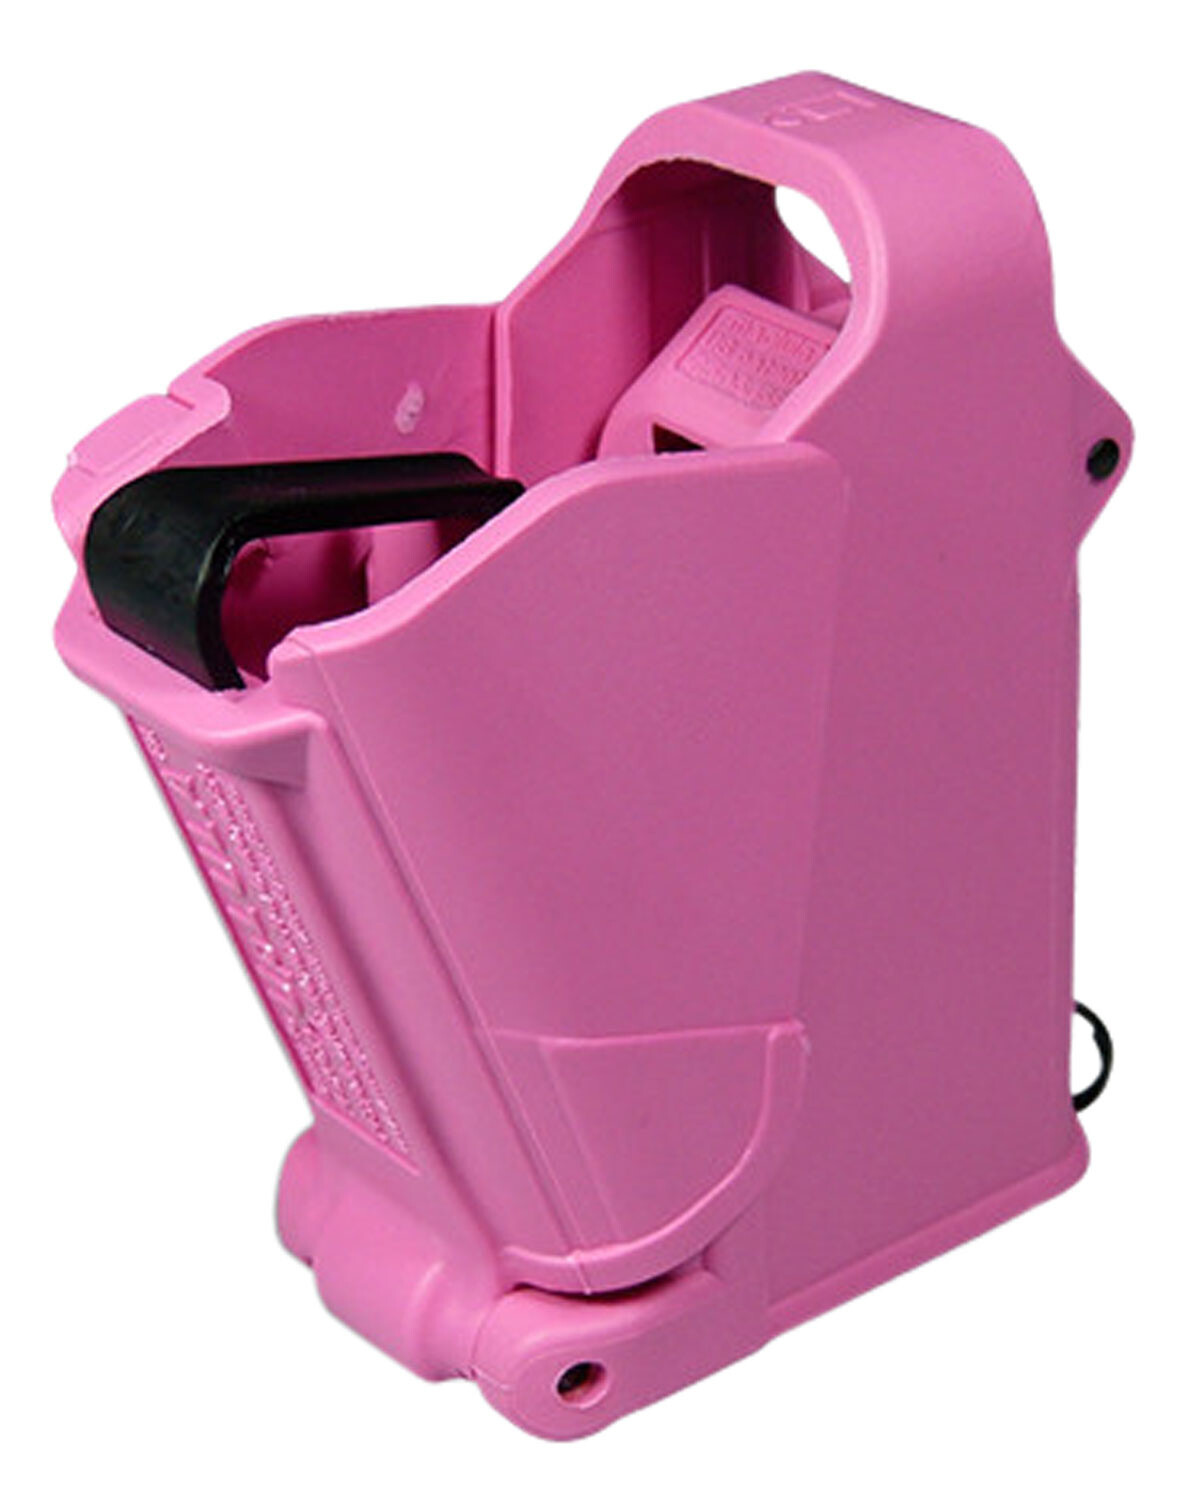 Maglula UpLula Universal Pistol Mag Loader 9mm to 45 ACP Pink